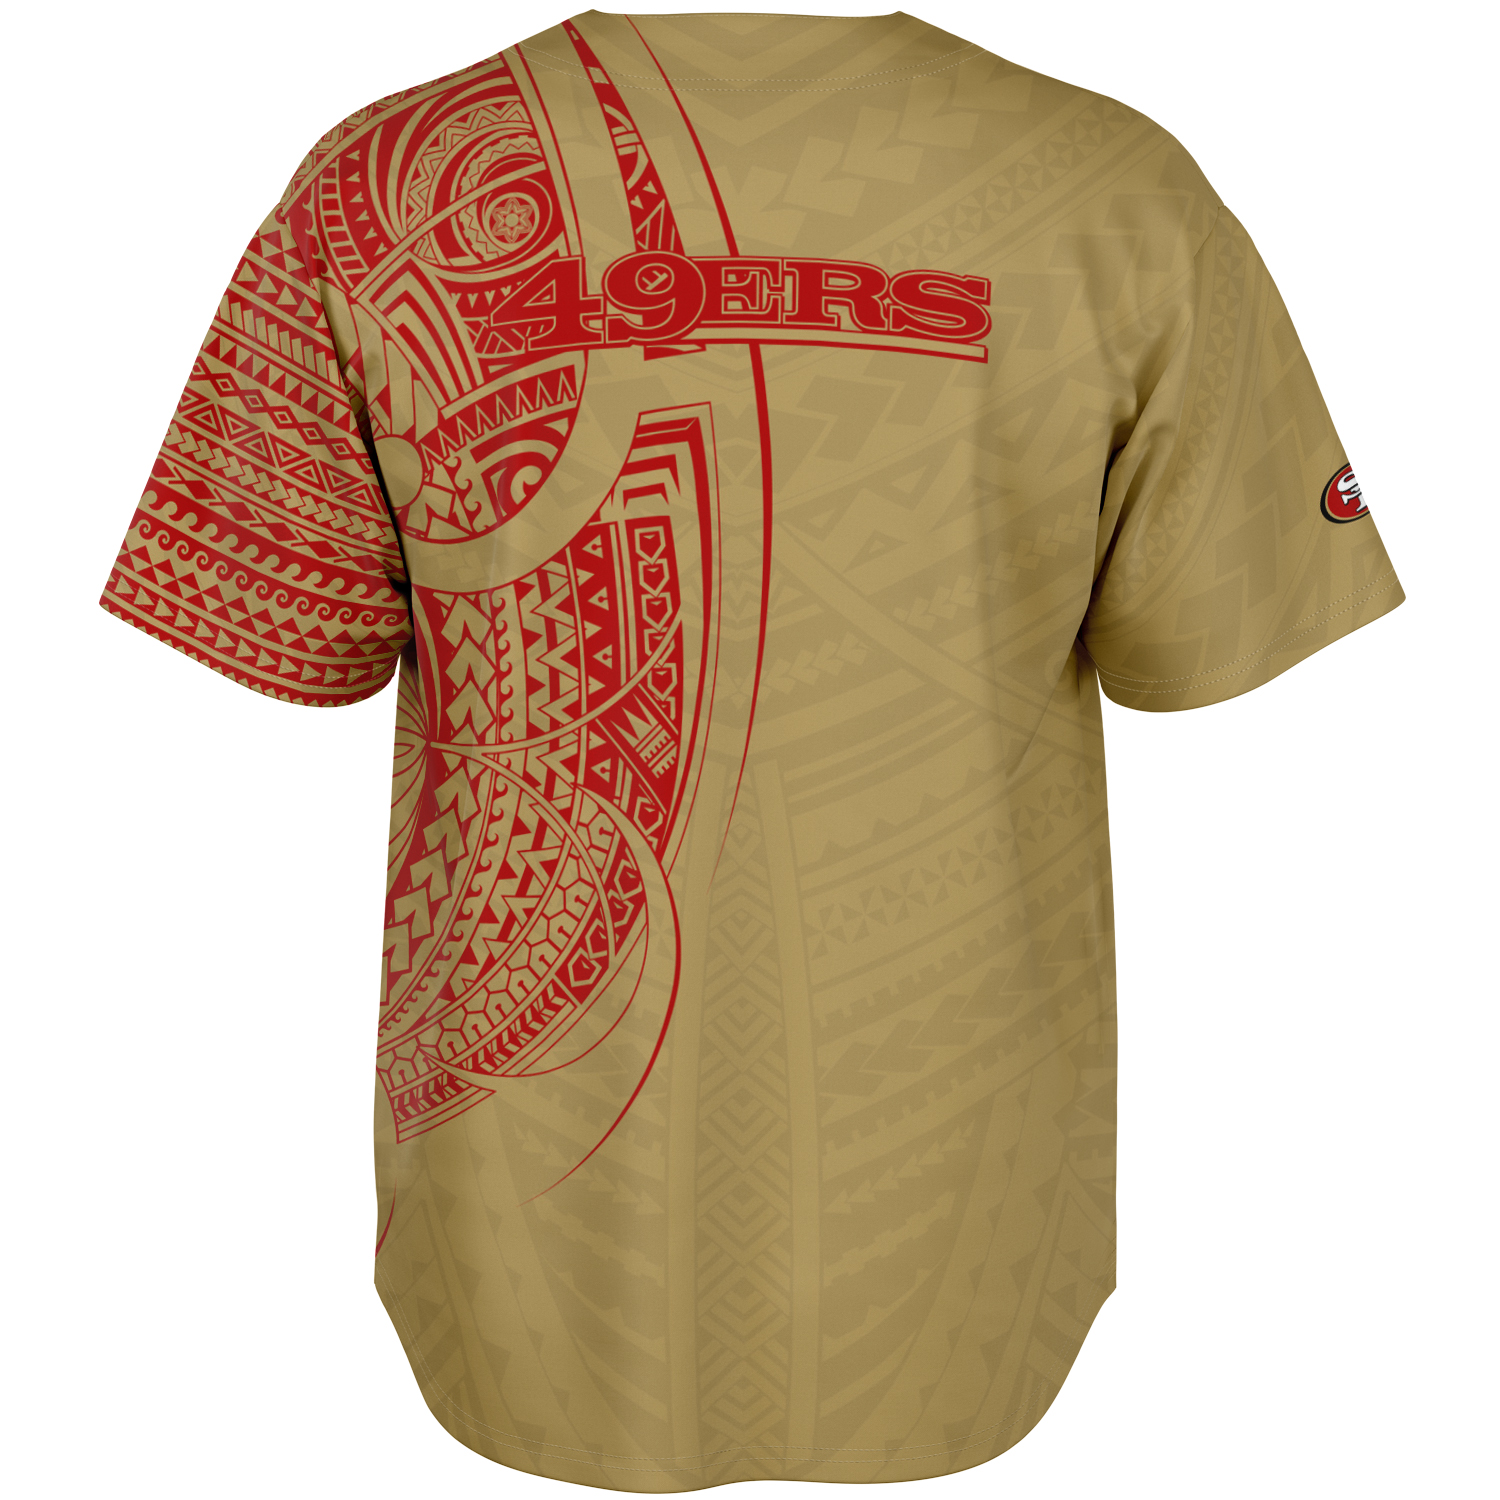 gold 49ers shirts